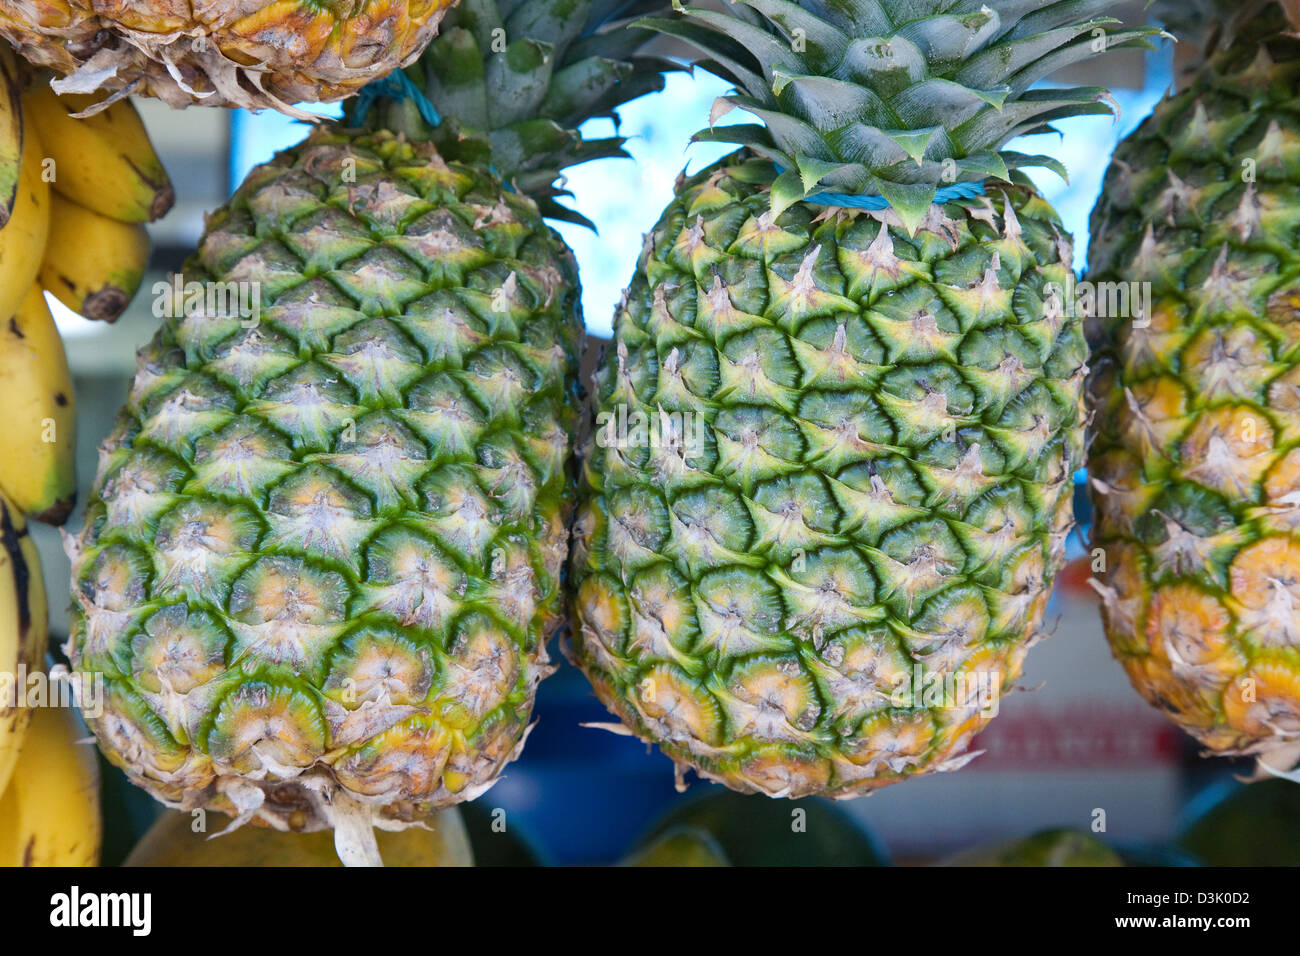 america, caribbean sea, hispaniola island, dominican republic, area of higuey, fruit shop, pineapples Stock Photo